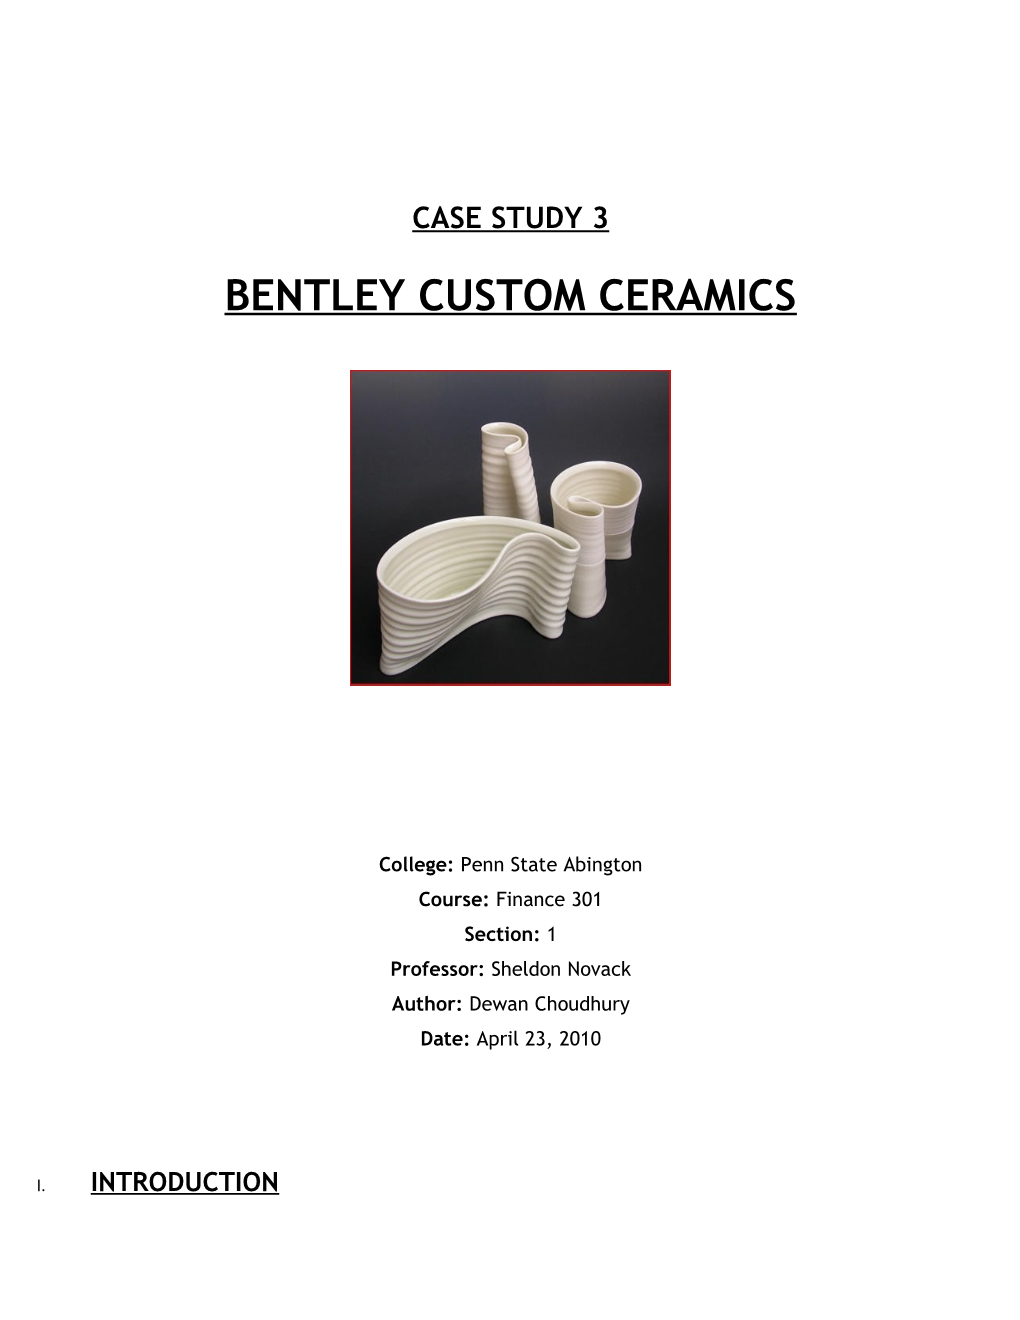 Bentley Custom Ceramics